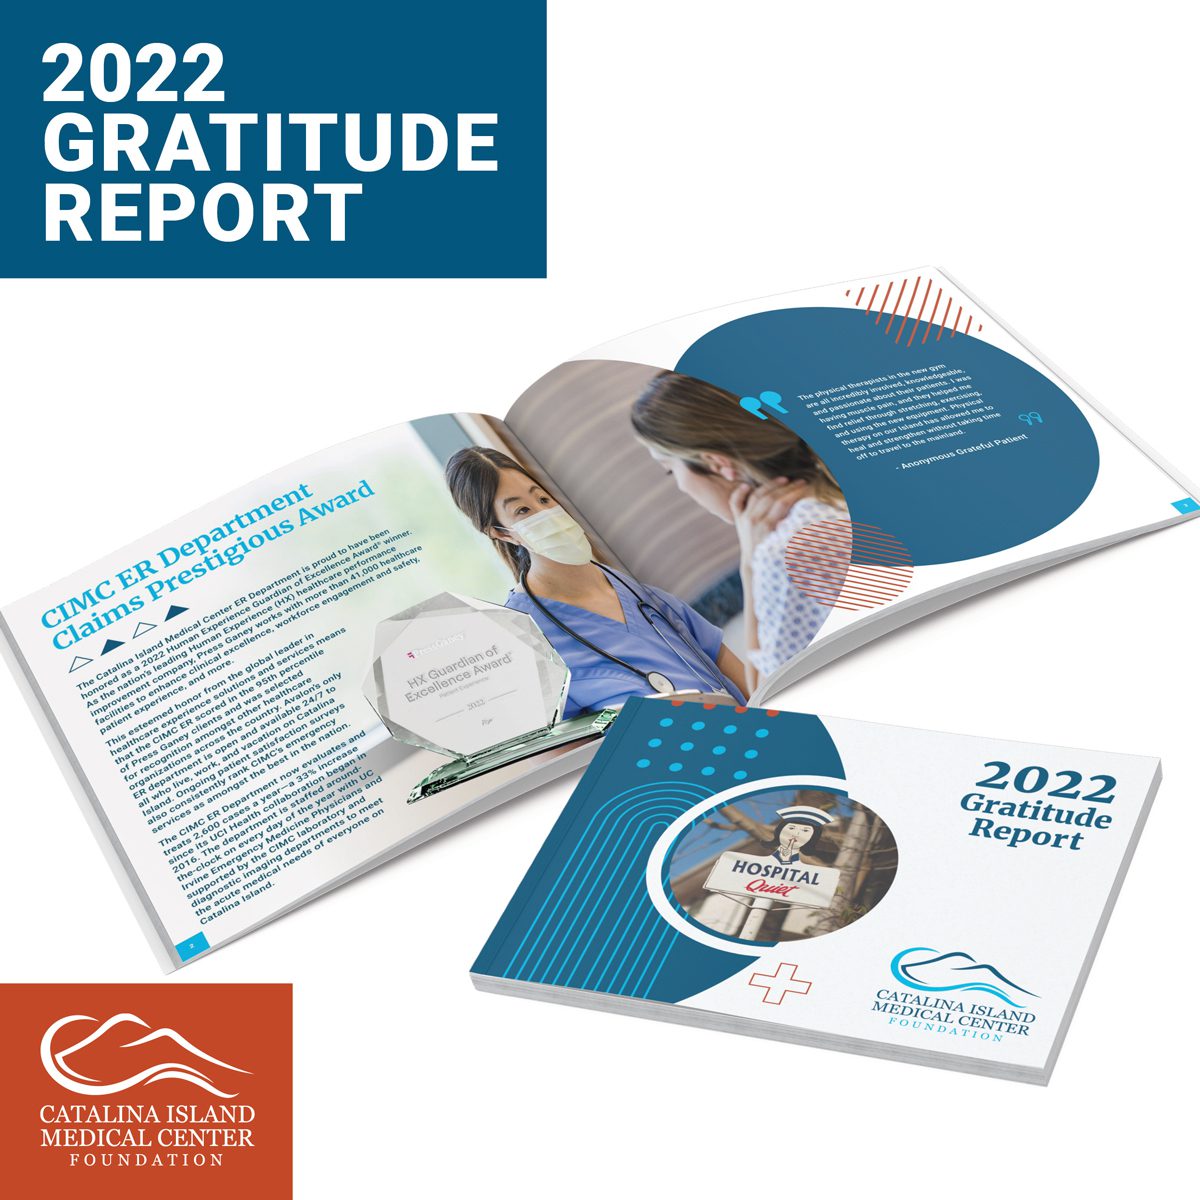 2022 annual report